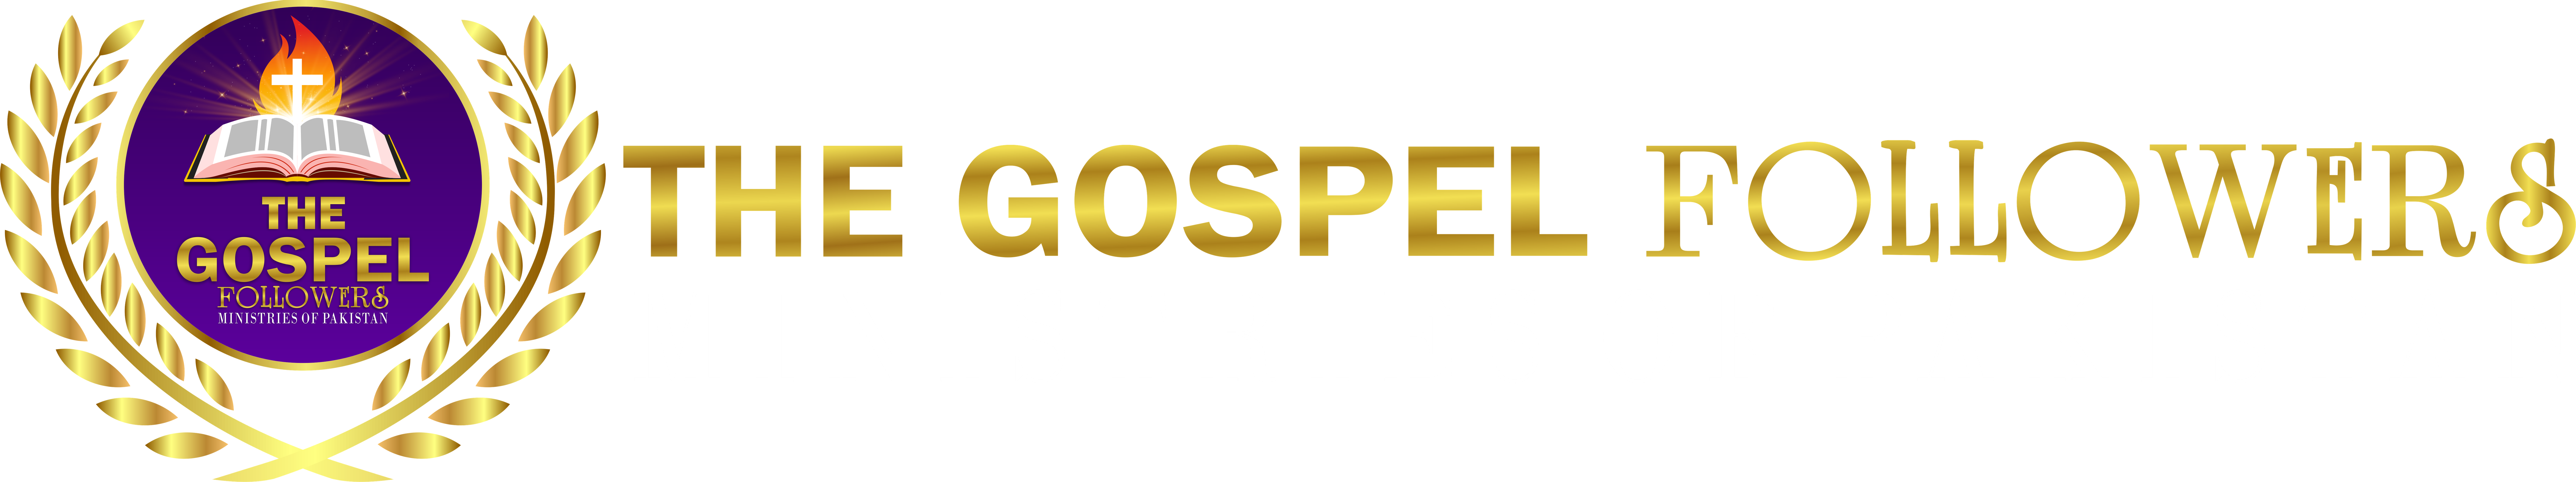 The Gospel Followers Ministries